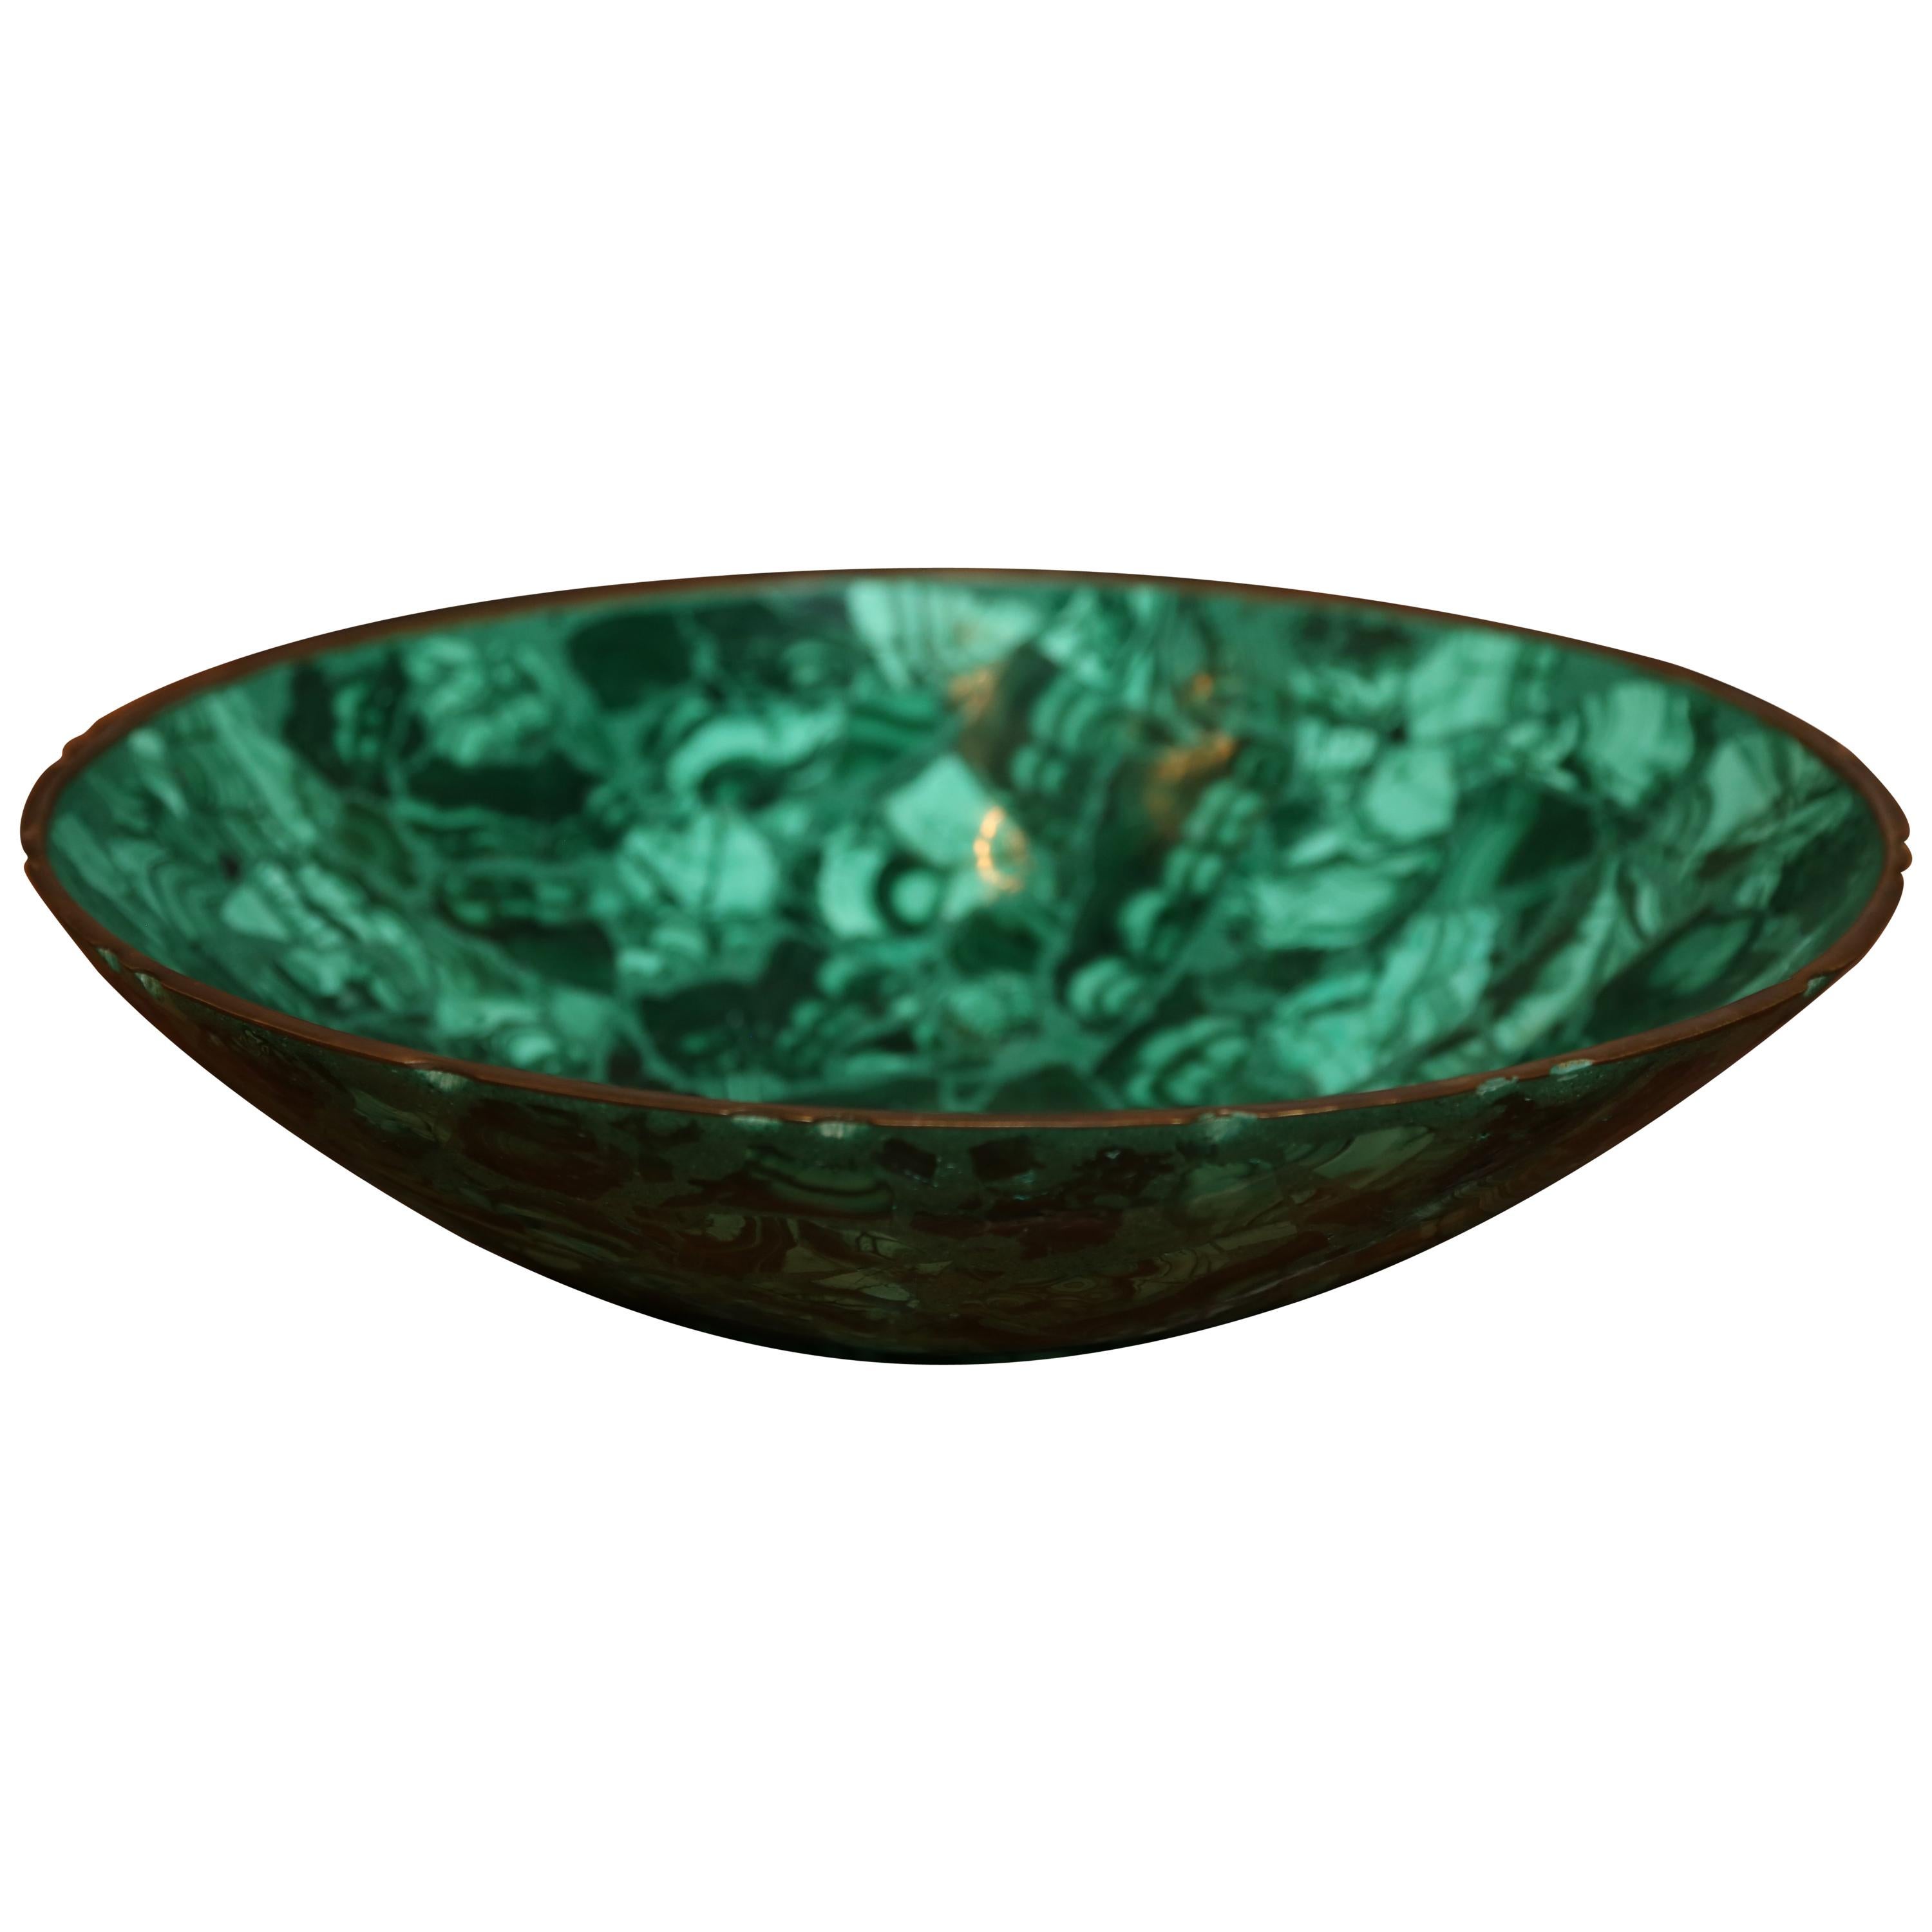 Tessellated Malachite Bowl with Bronze Trim